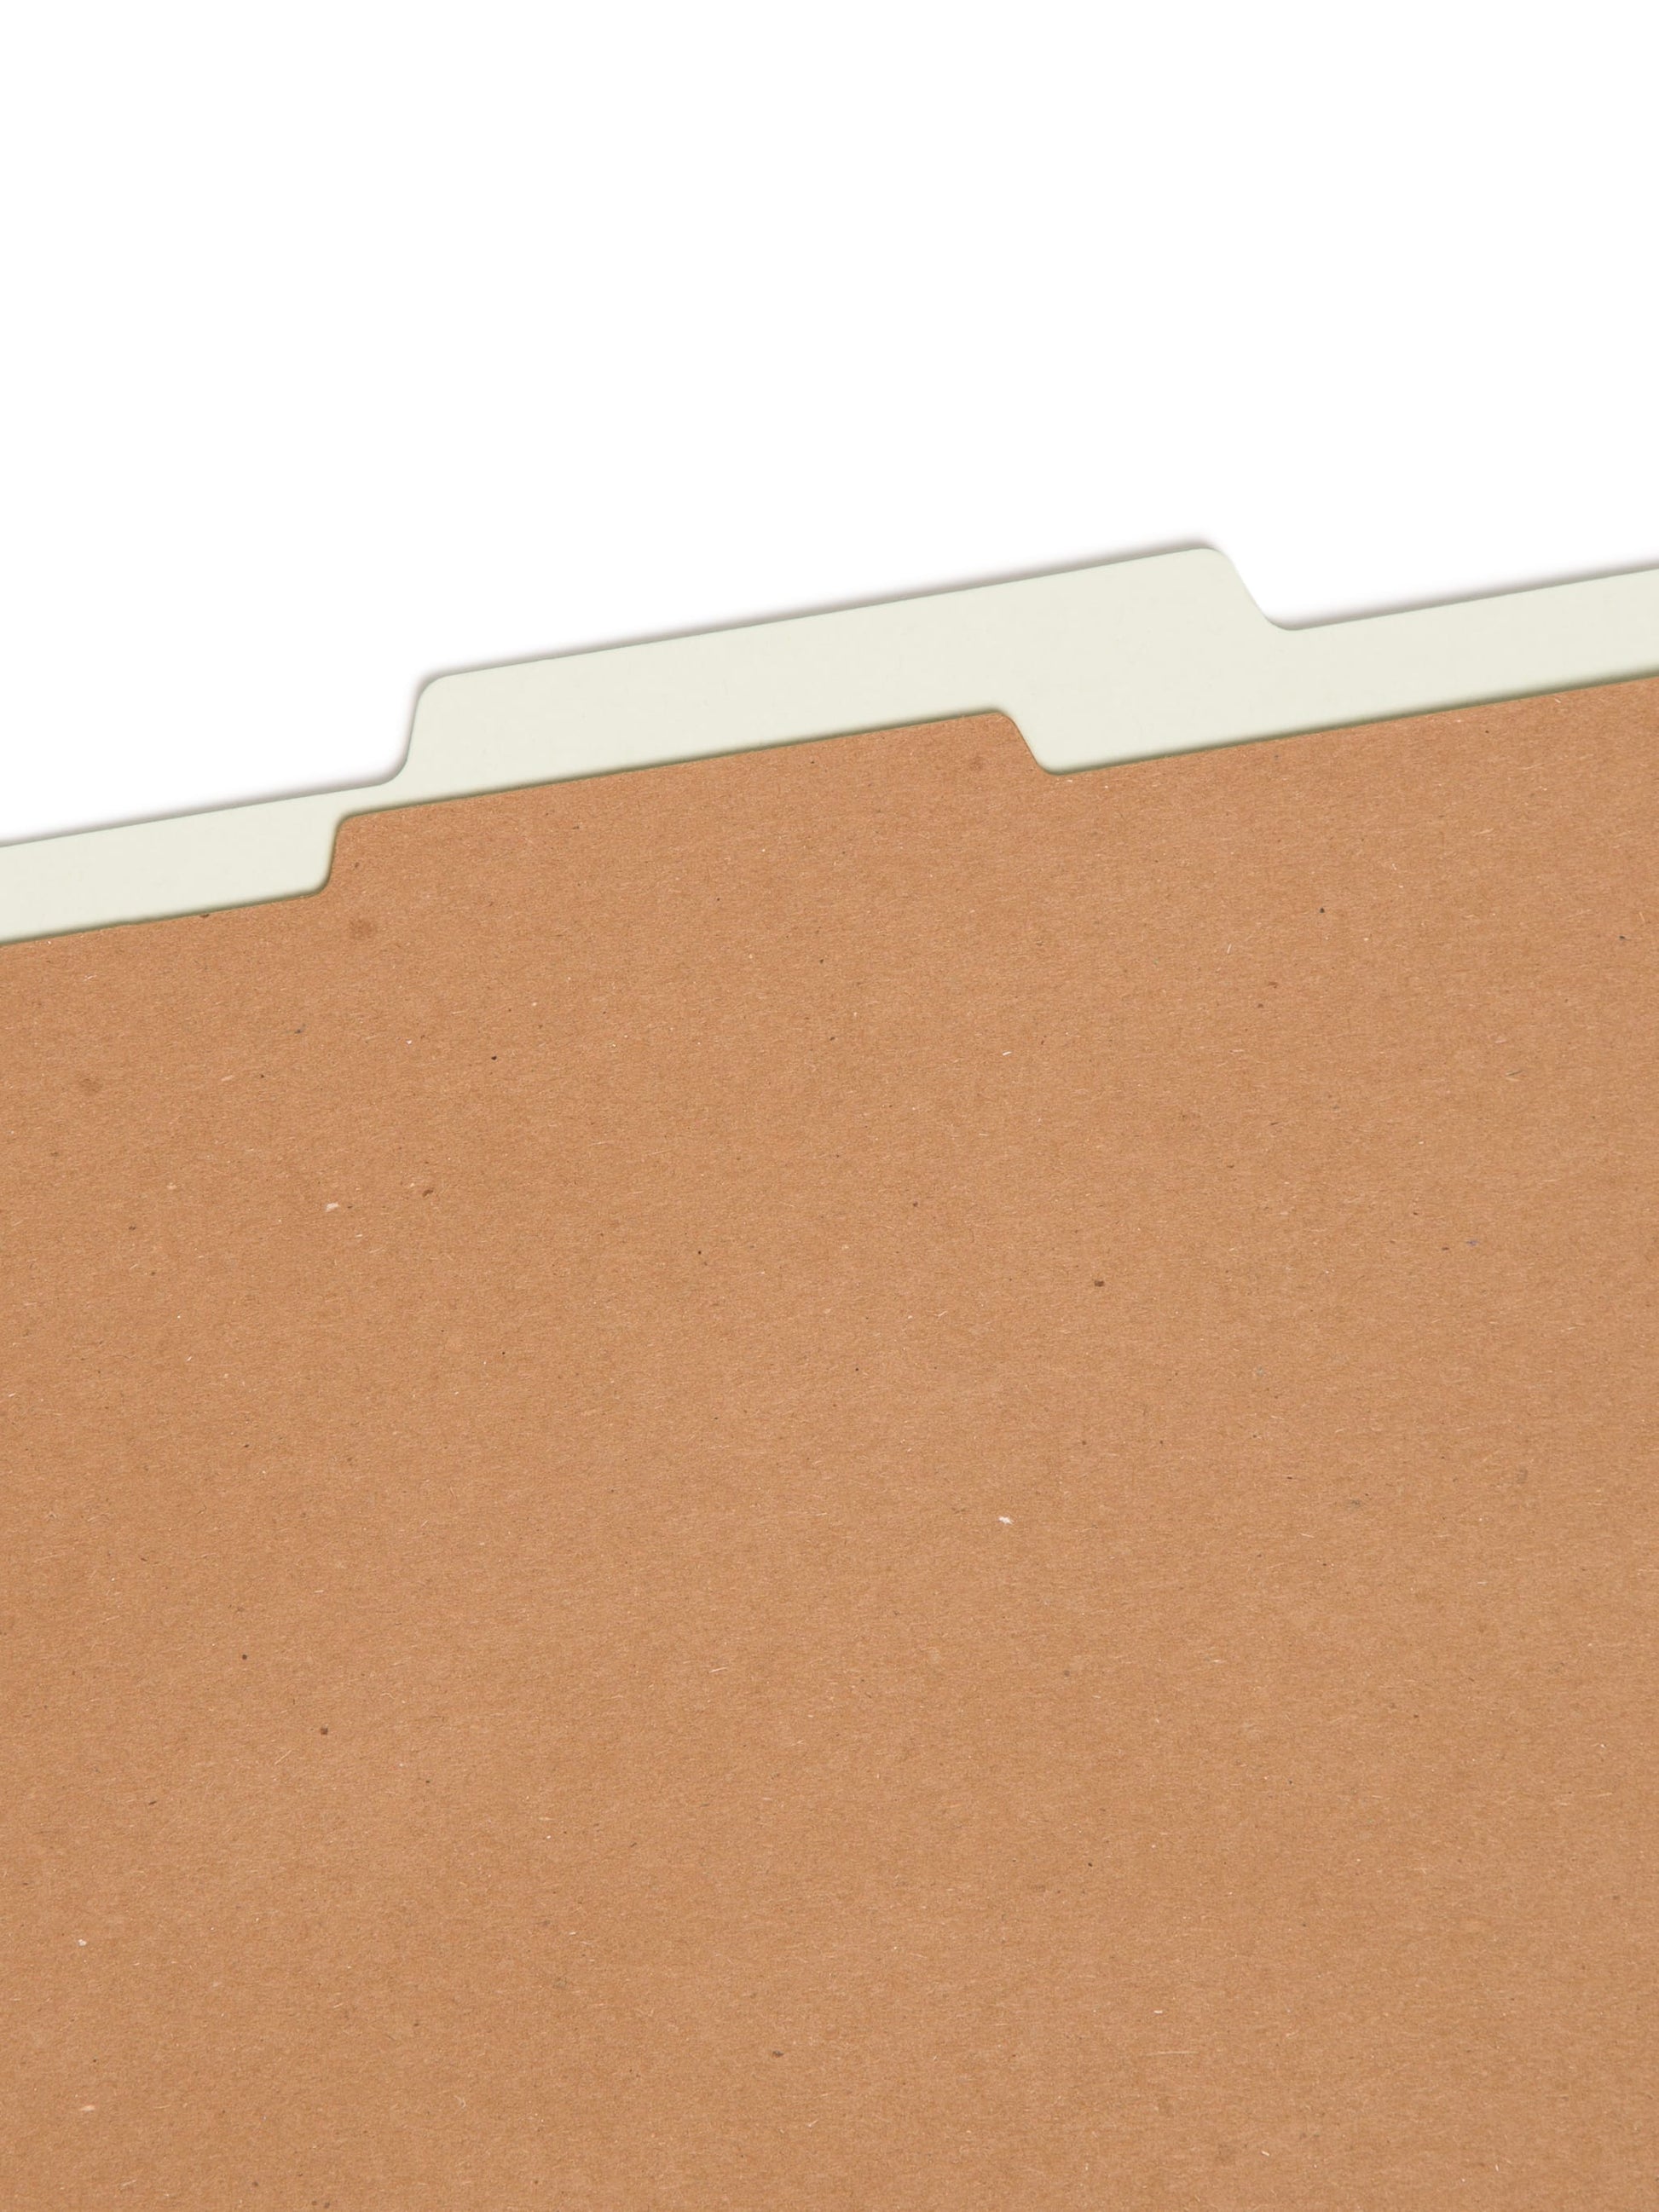 Pressboard Classification File Folders, 1 Divider, 2 inch Expansion, Gray/Green Color, Letter Size, 